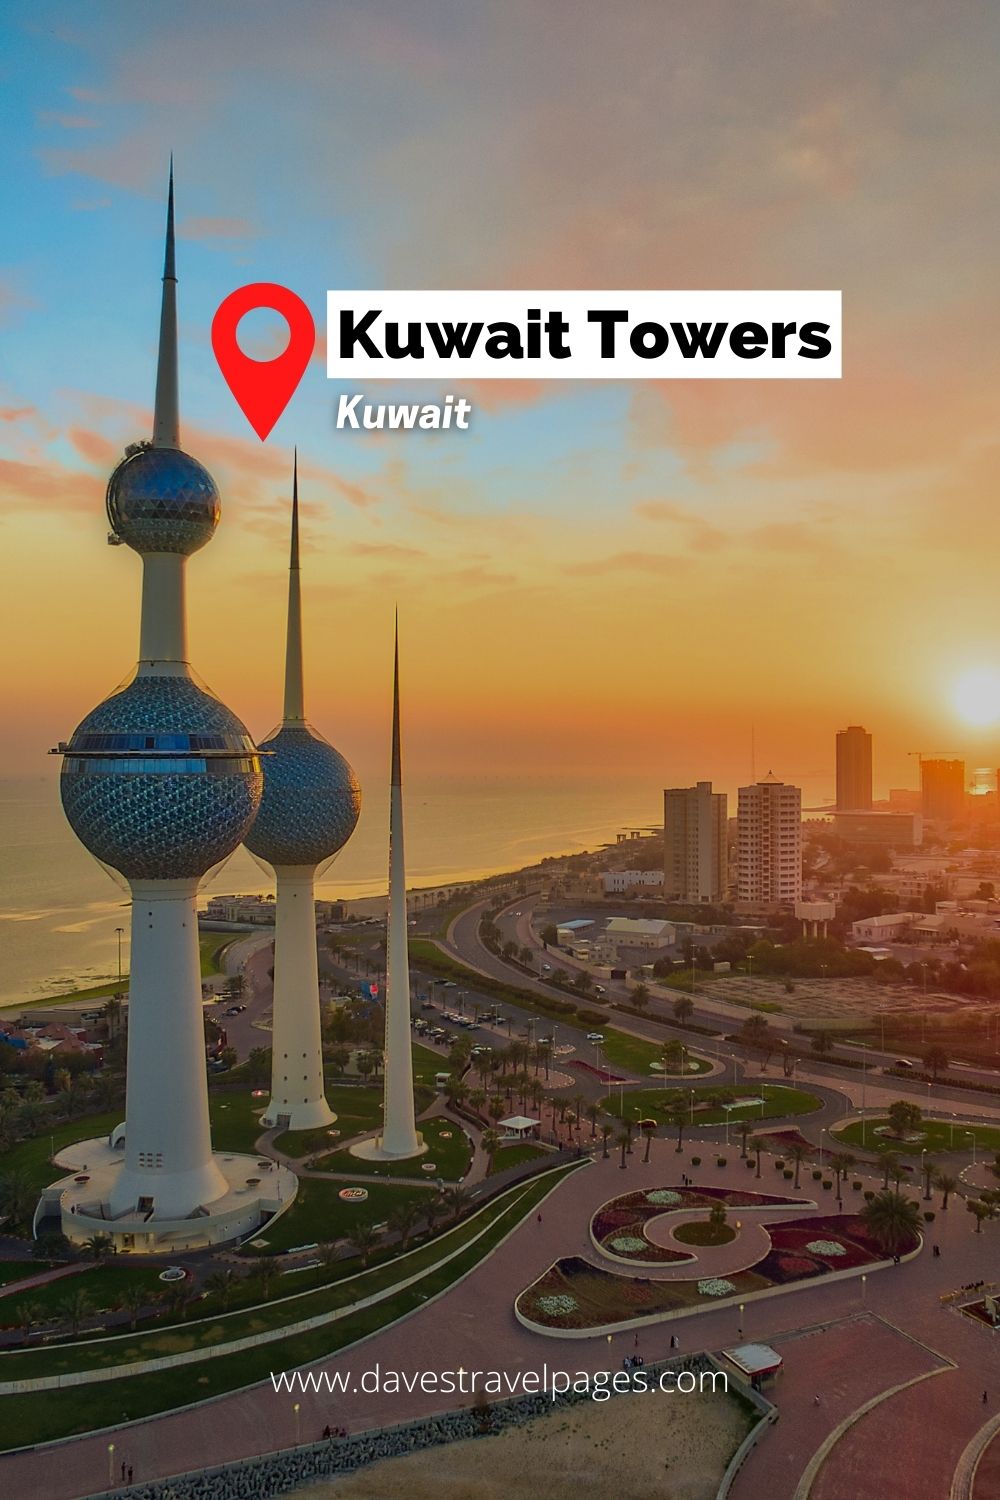 Kuwait Towers are a monumental landmark